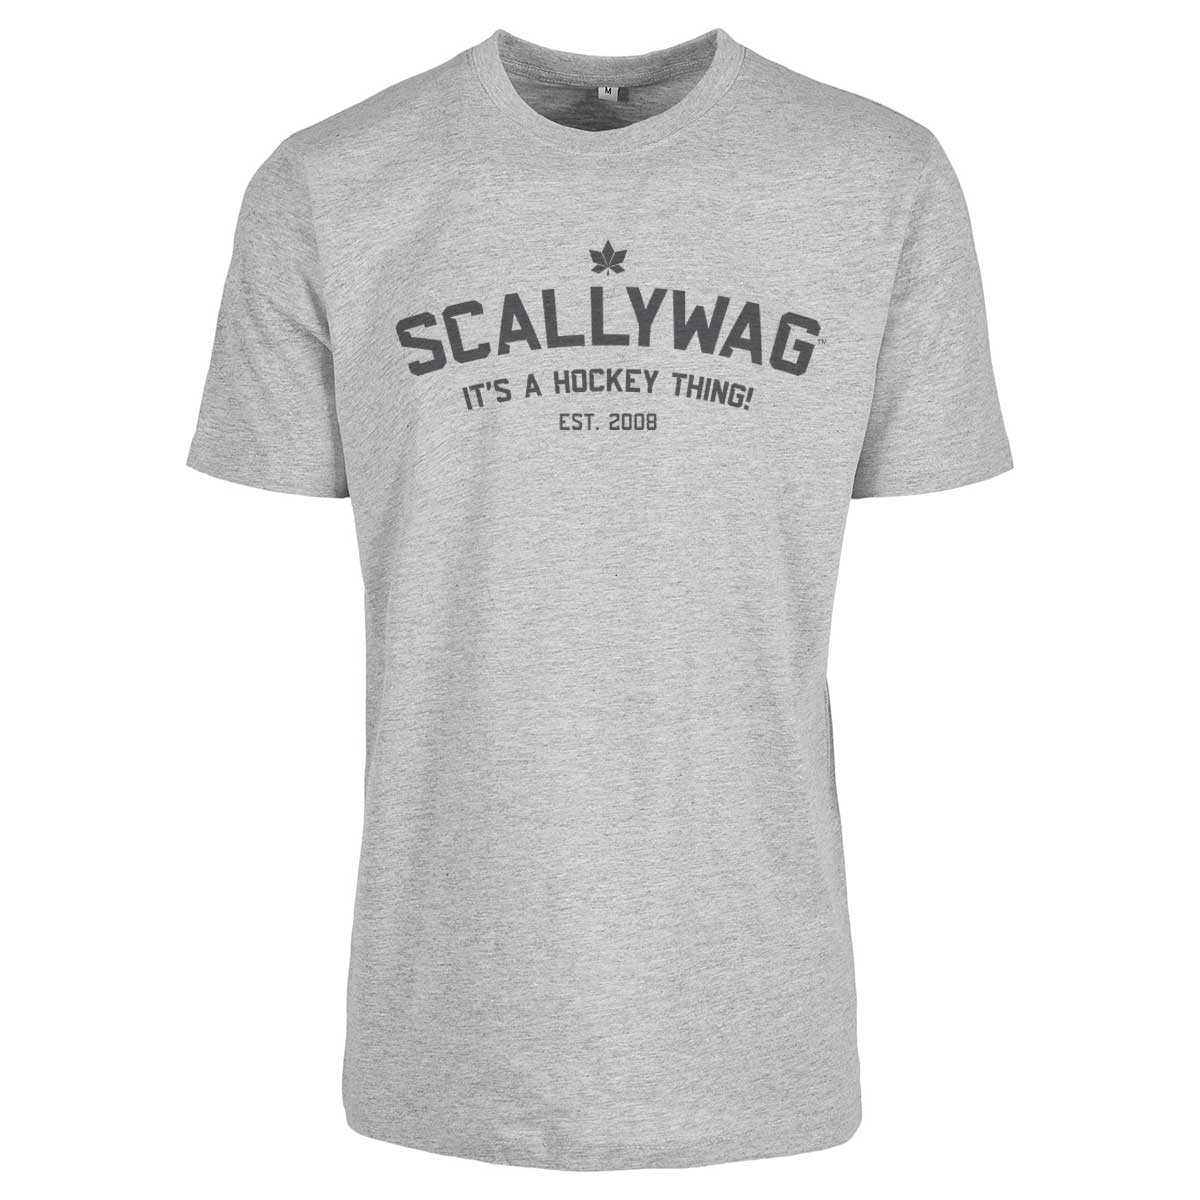 SCALLYWAG® T-Shirt IT’S A HOCKEY THING! - COR3zilla